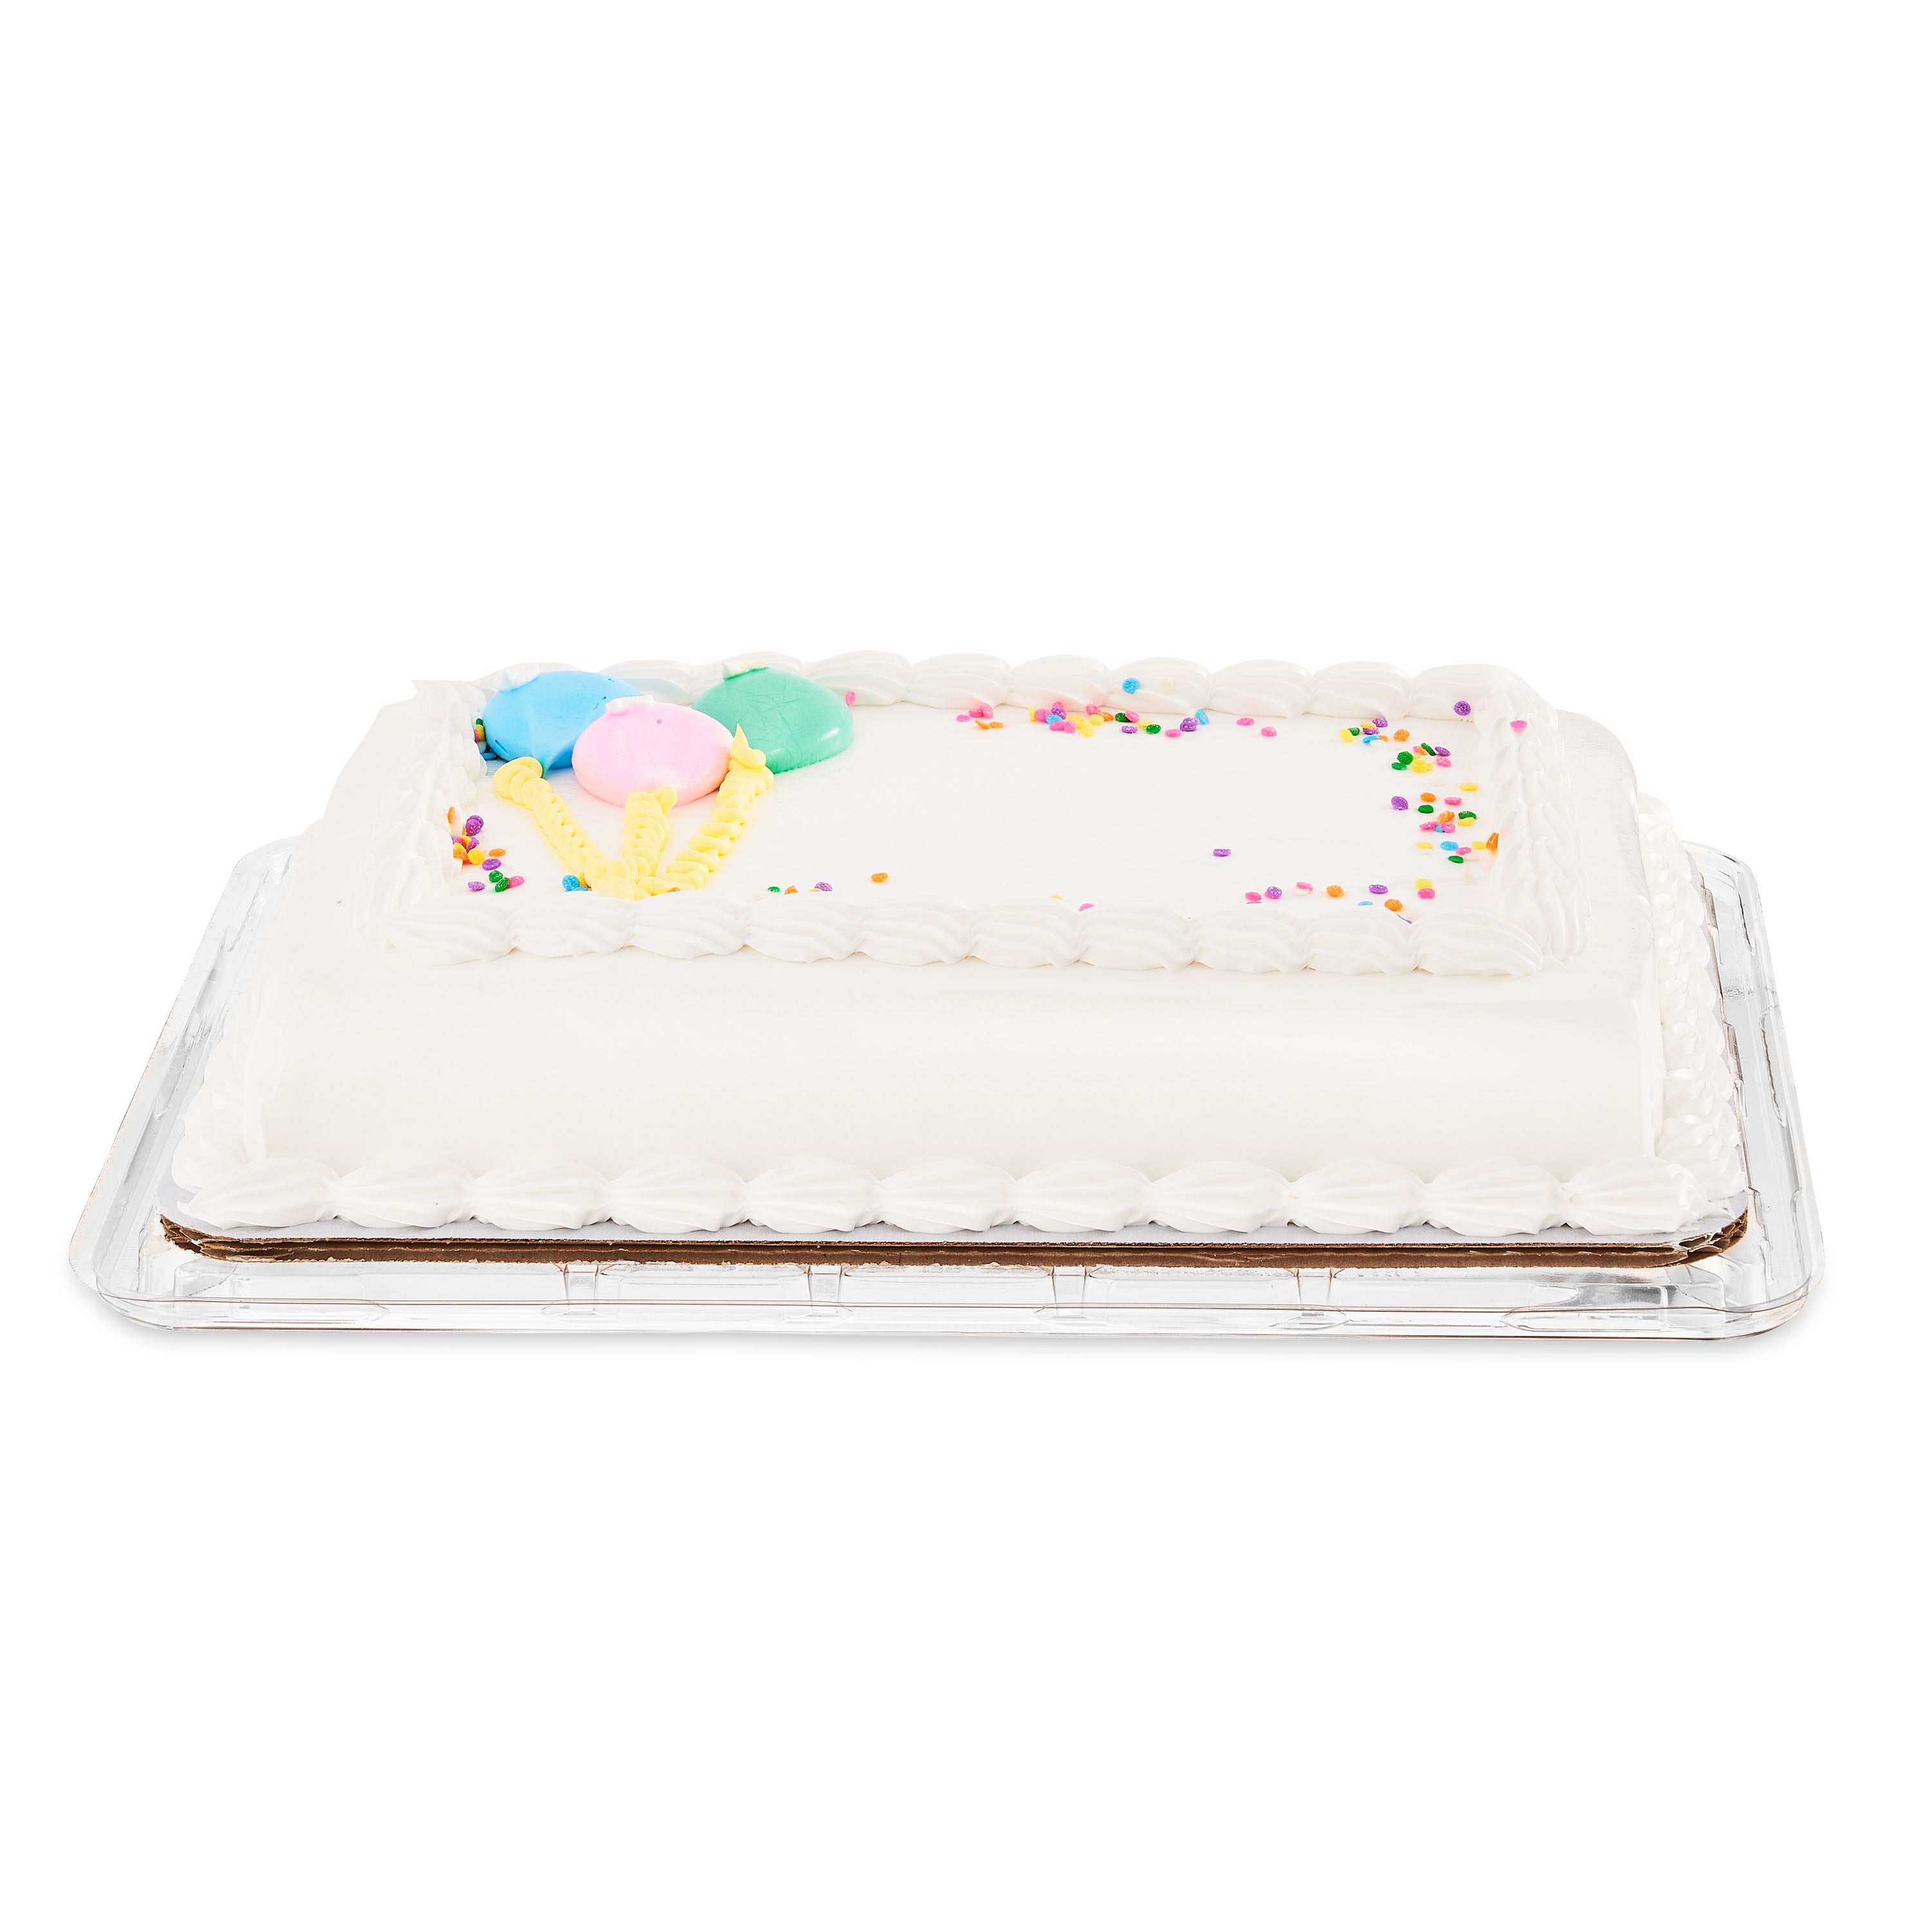 Cake Wrecks - Home - Sunday Sweets: Pretty As A Princess